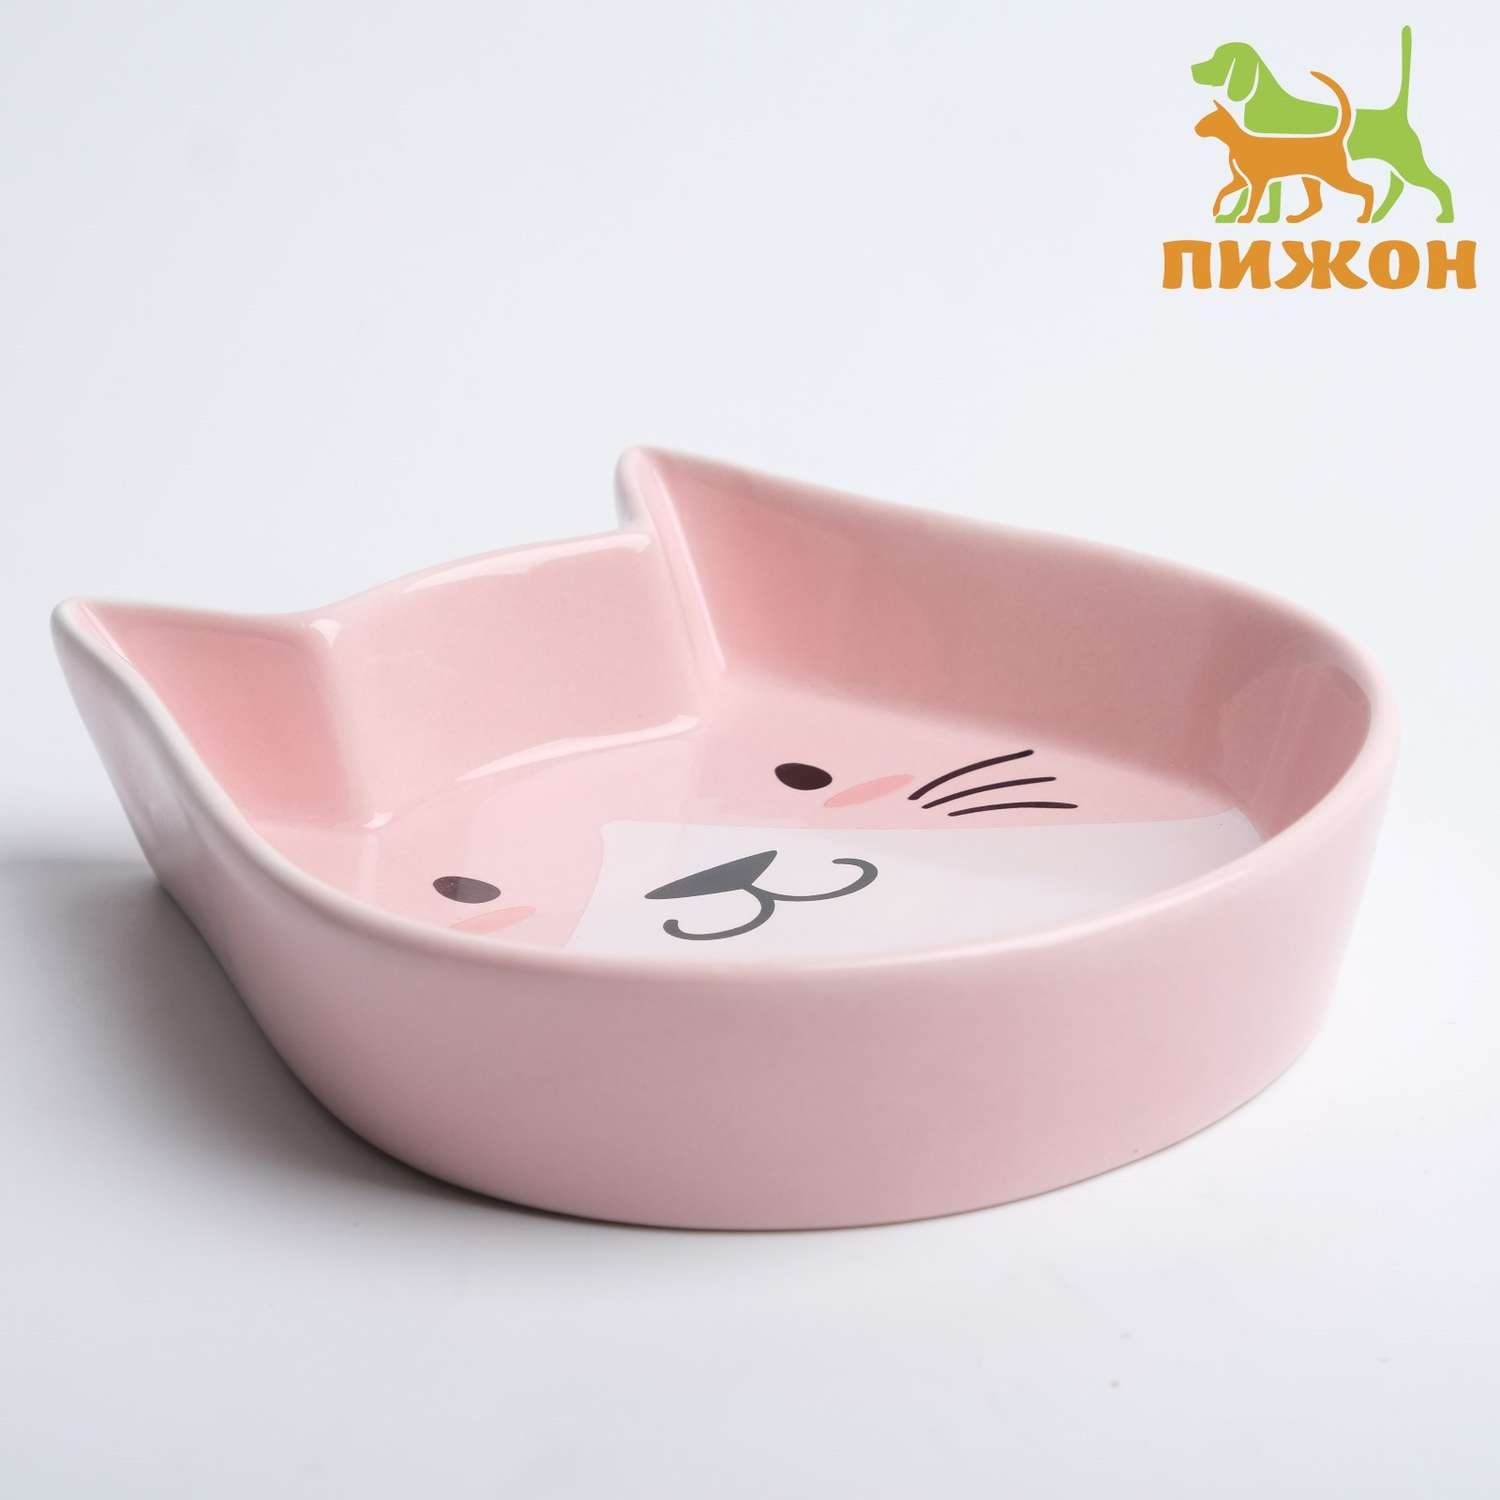 Миска Пижон керамическая «Голова кота 2» 200 мл 15x13x3 cм розовая - фото 1